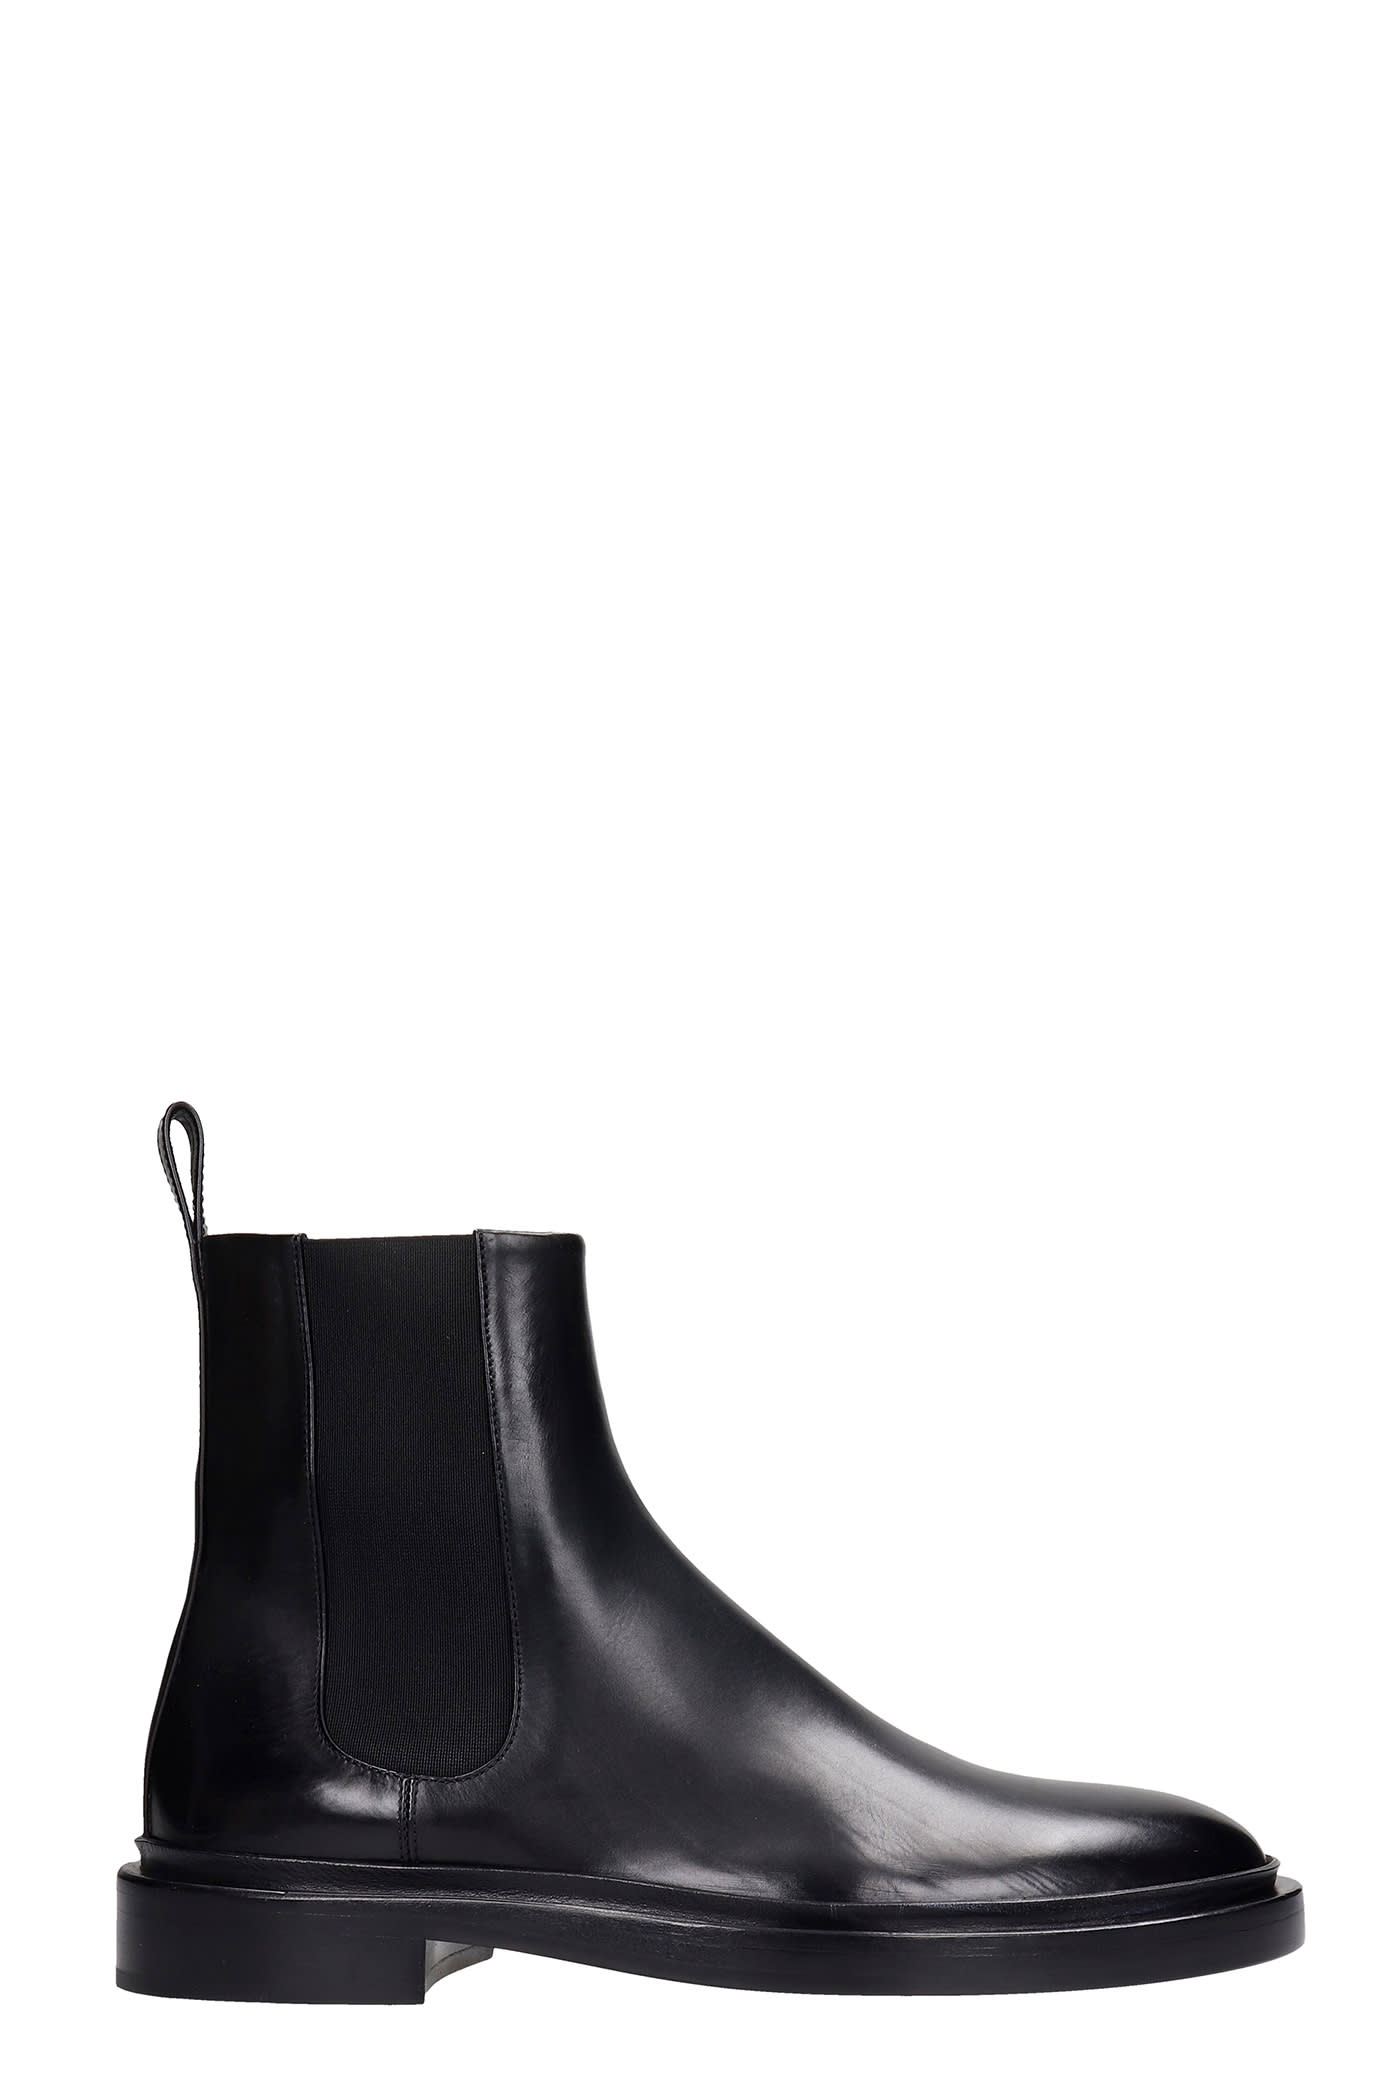 Jil Sander Ankle Boots In Black Leather